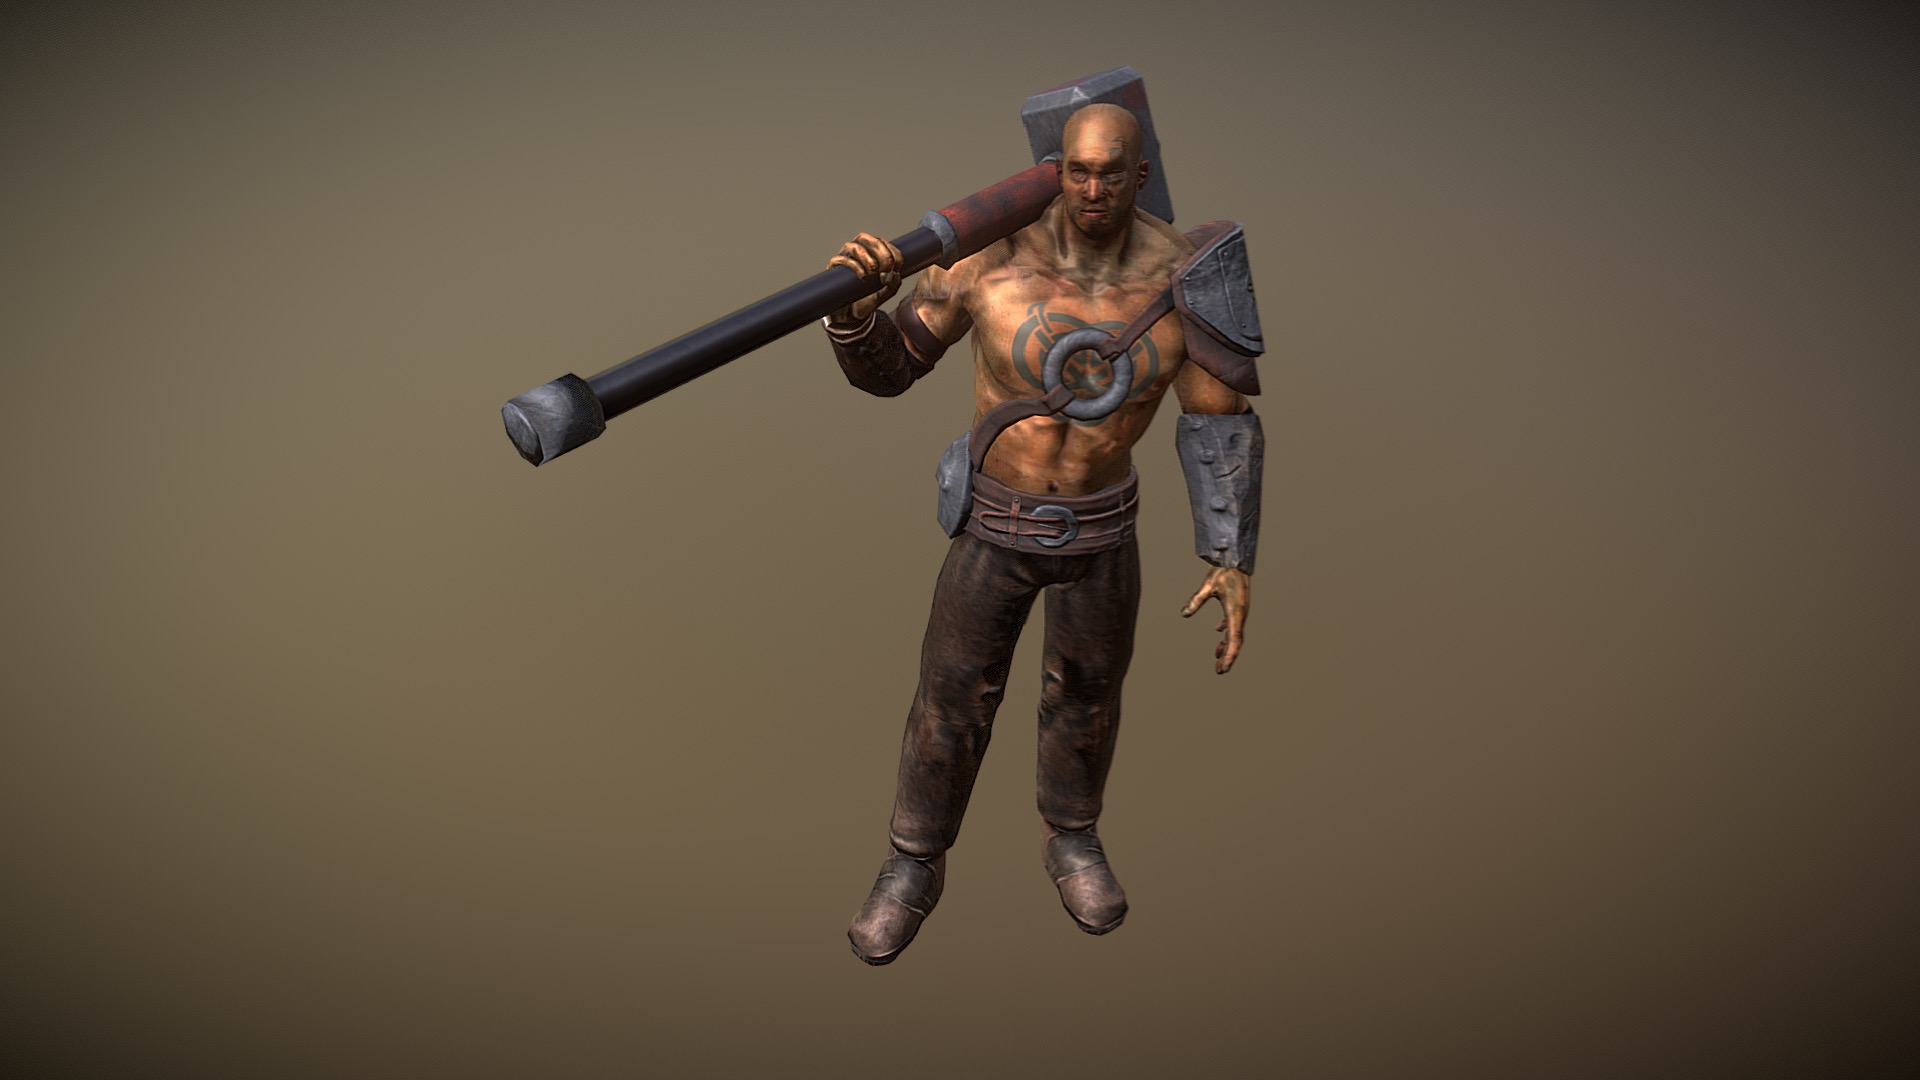 3D model Hamer warrior - This is a 3D model of the Hamer warrior. The 3D model is about a man in a garment holding a gun.